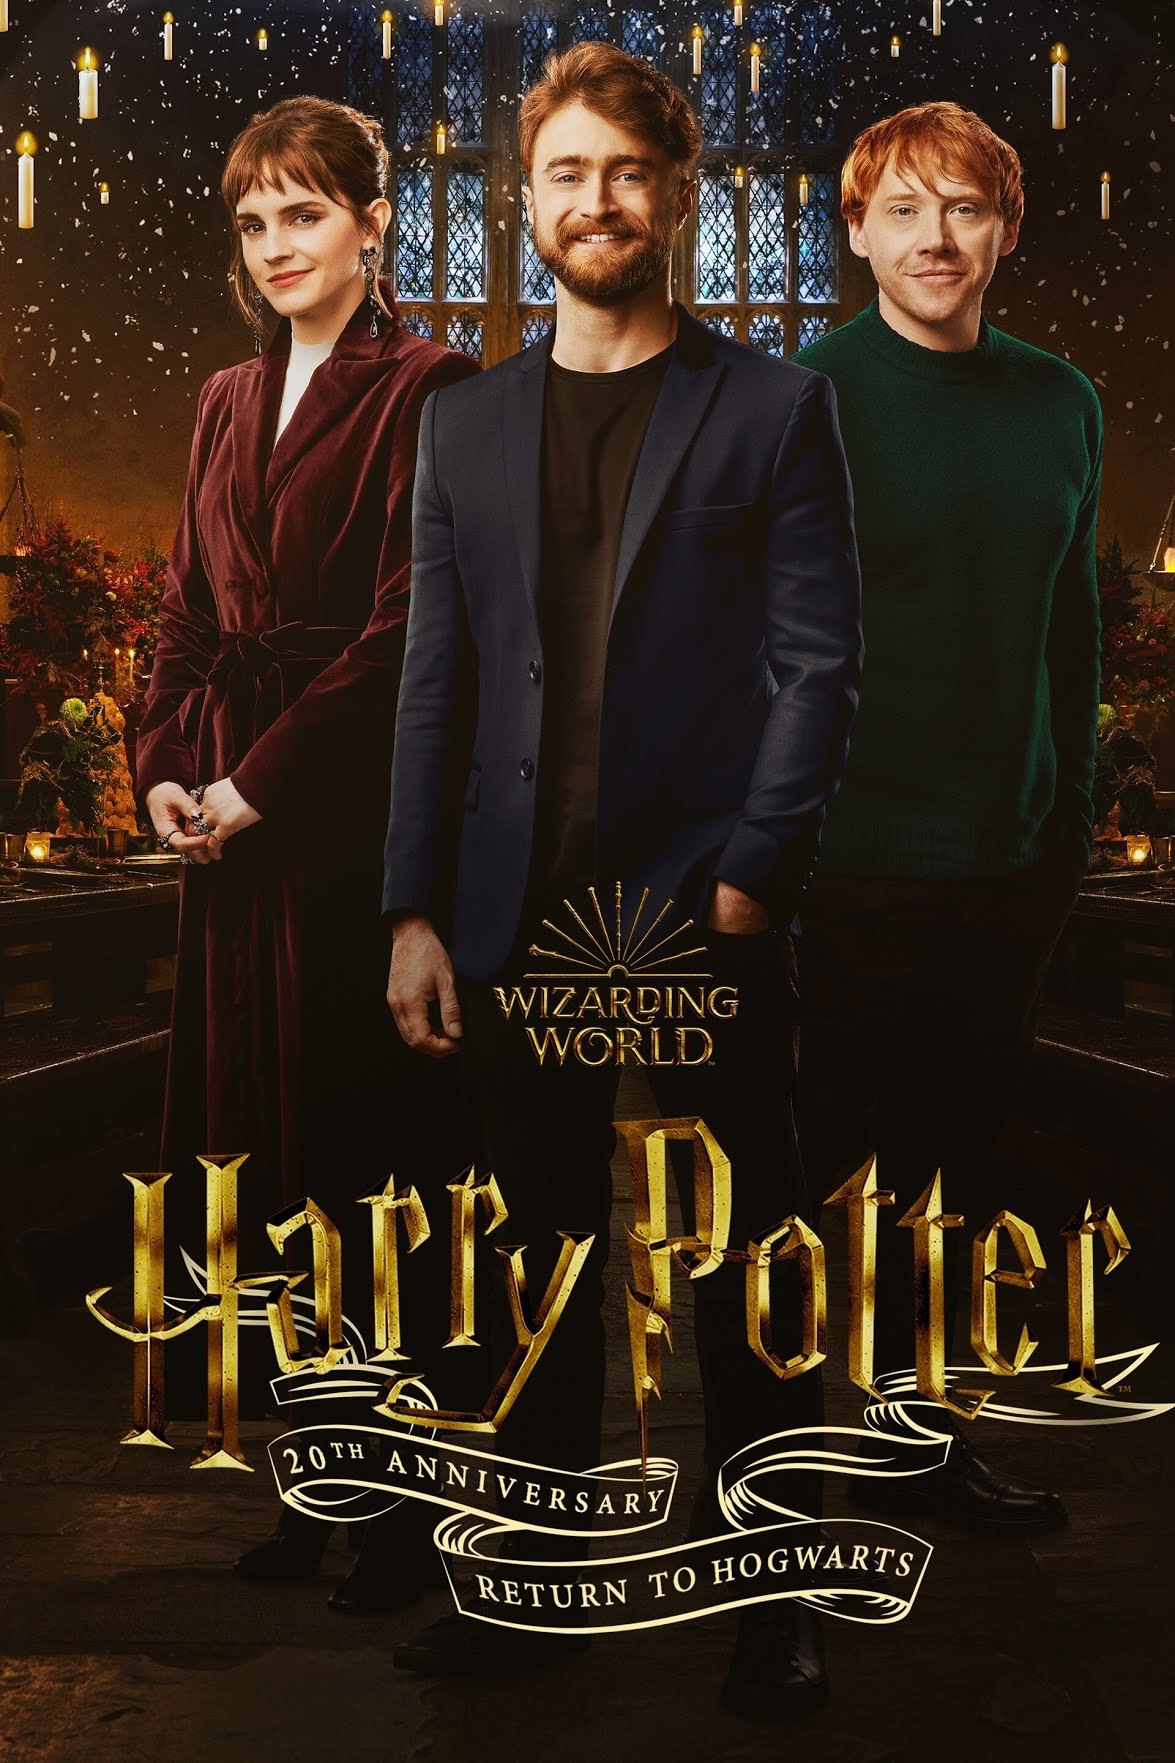  Harry Potter 20th Anniversary: Return to Hogwarts بیستمین سالگرد هری پاتر: بازگشت به هاگوارتز